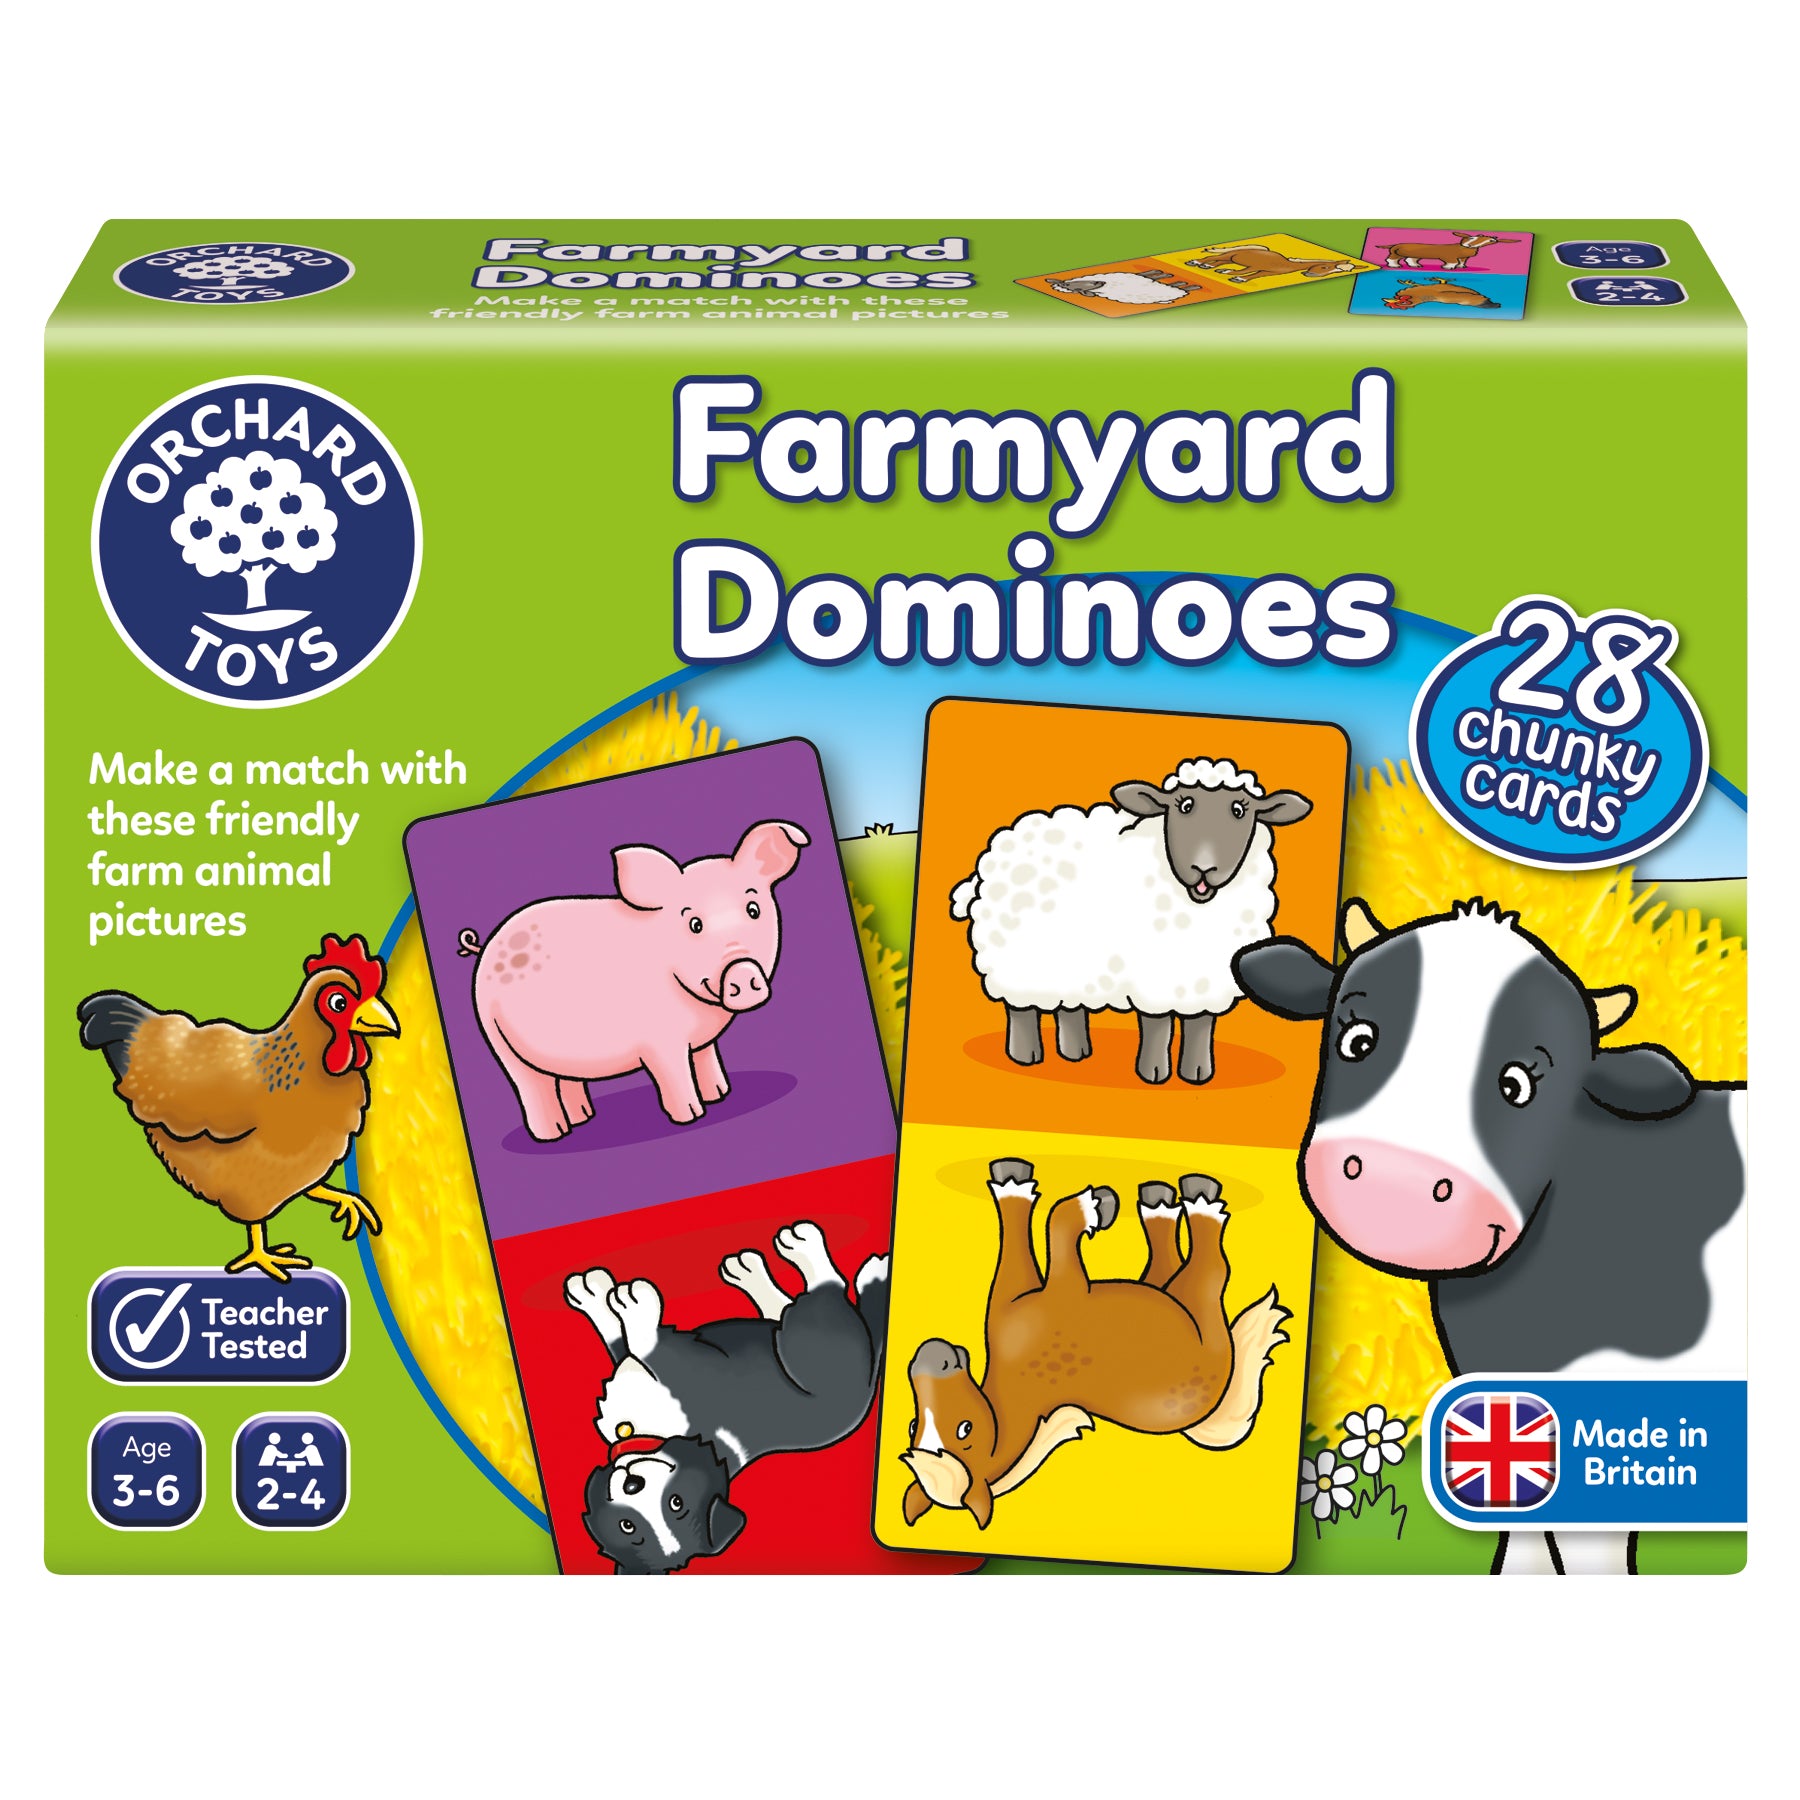 Orchard Farmyard Dominoes